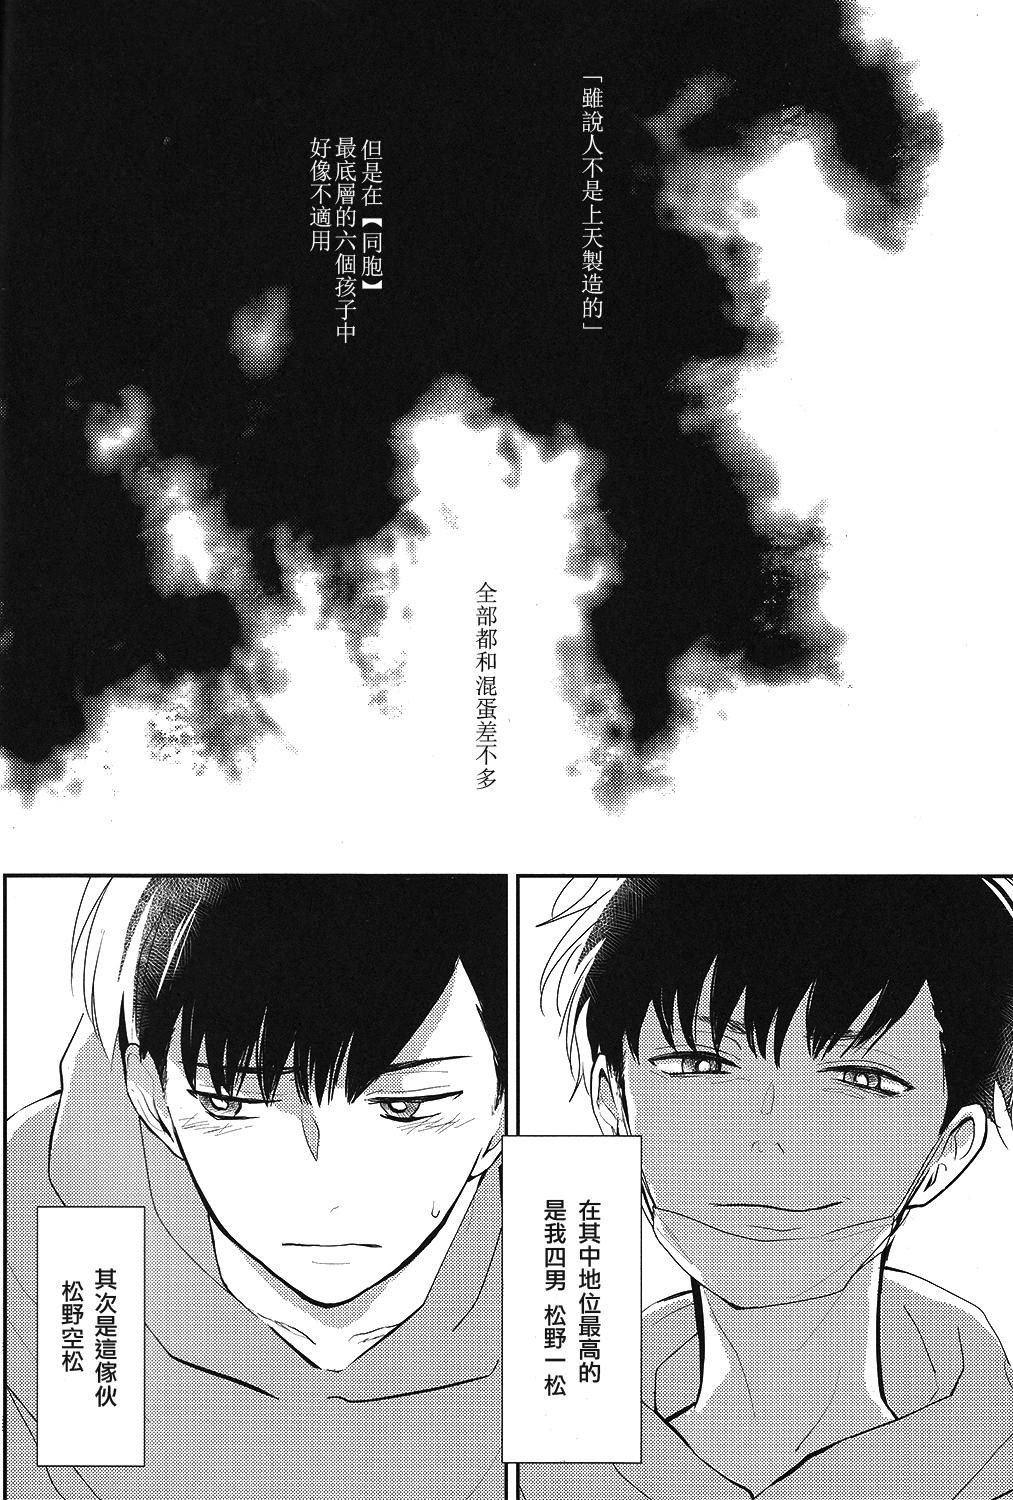 Fisting IchiKara no Susume. - Osomatsu-san Innocent - Page 5